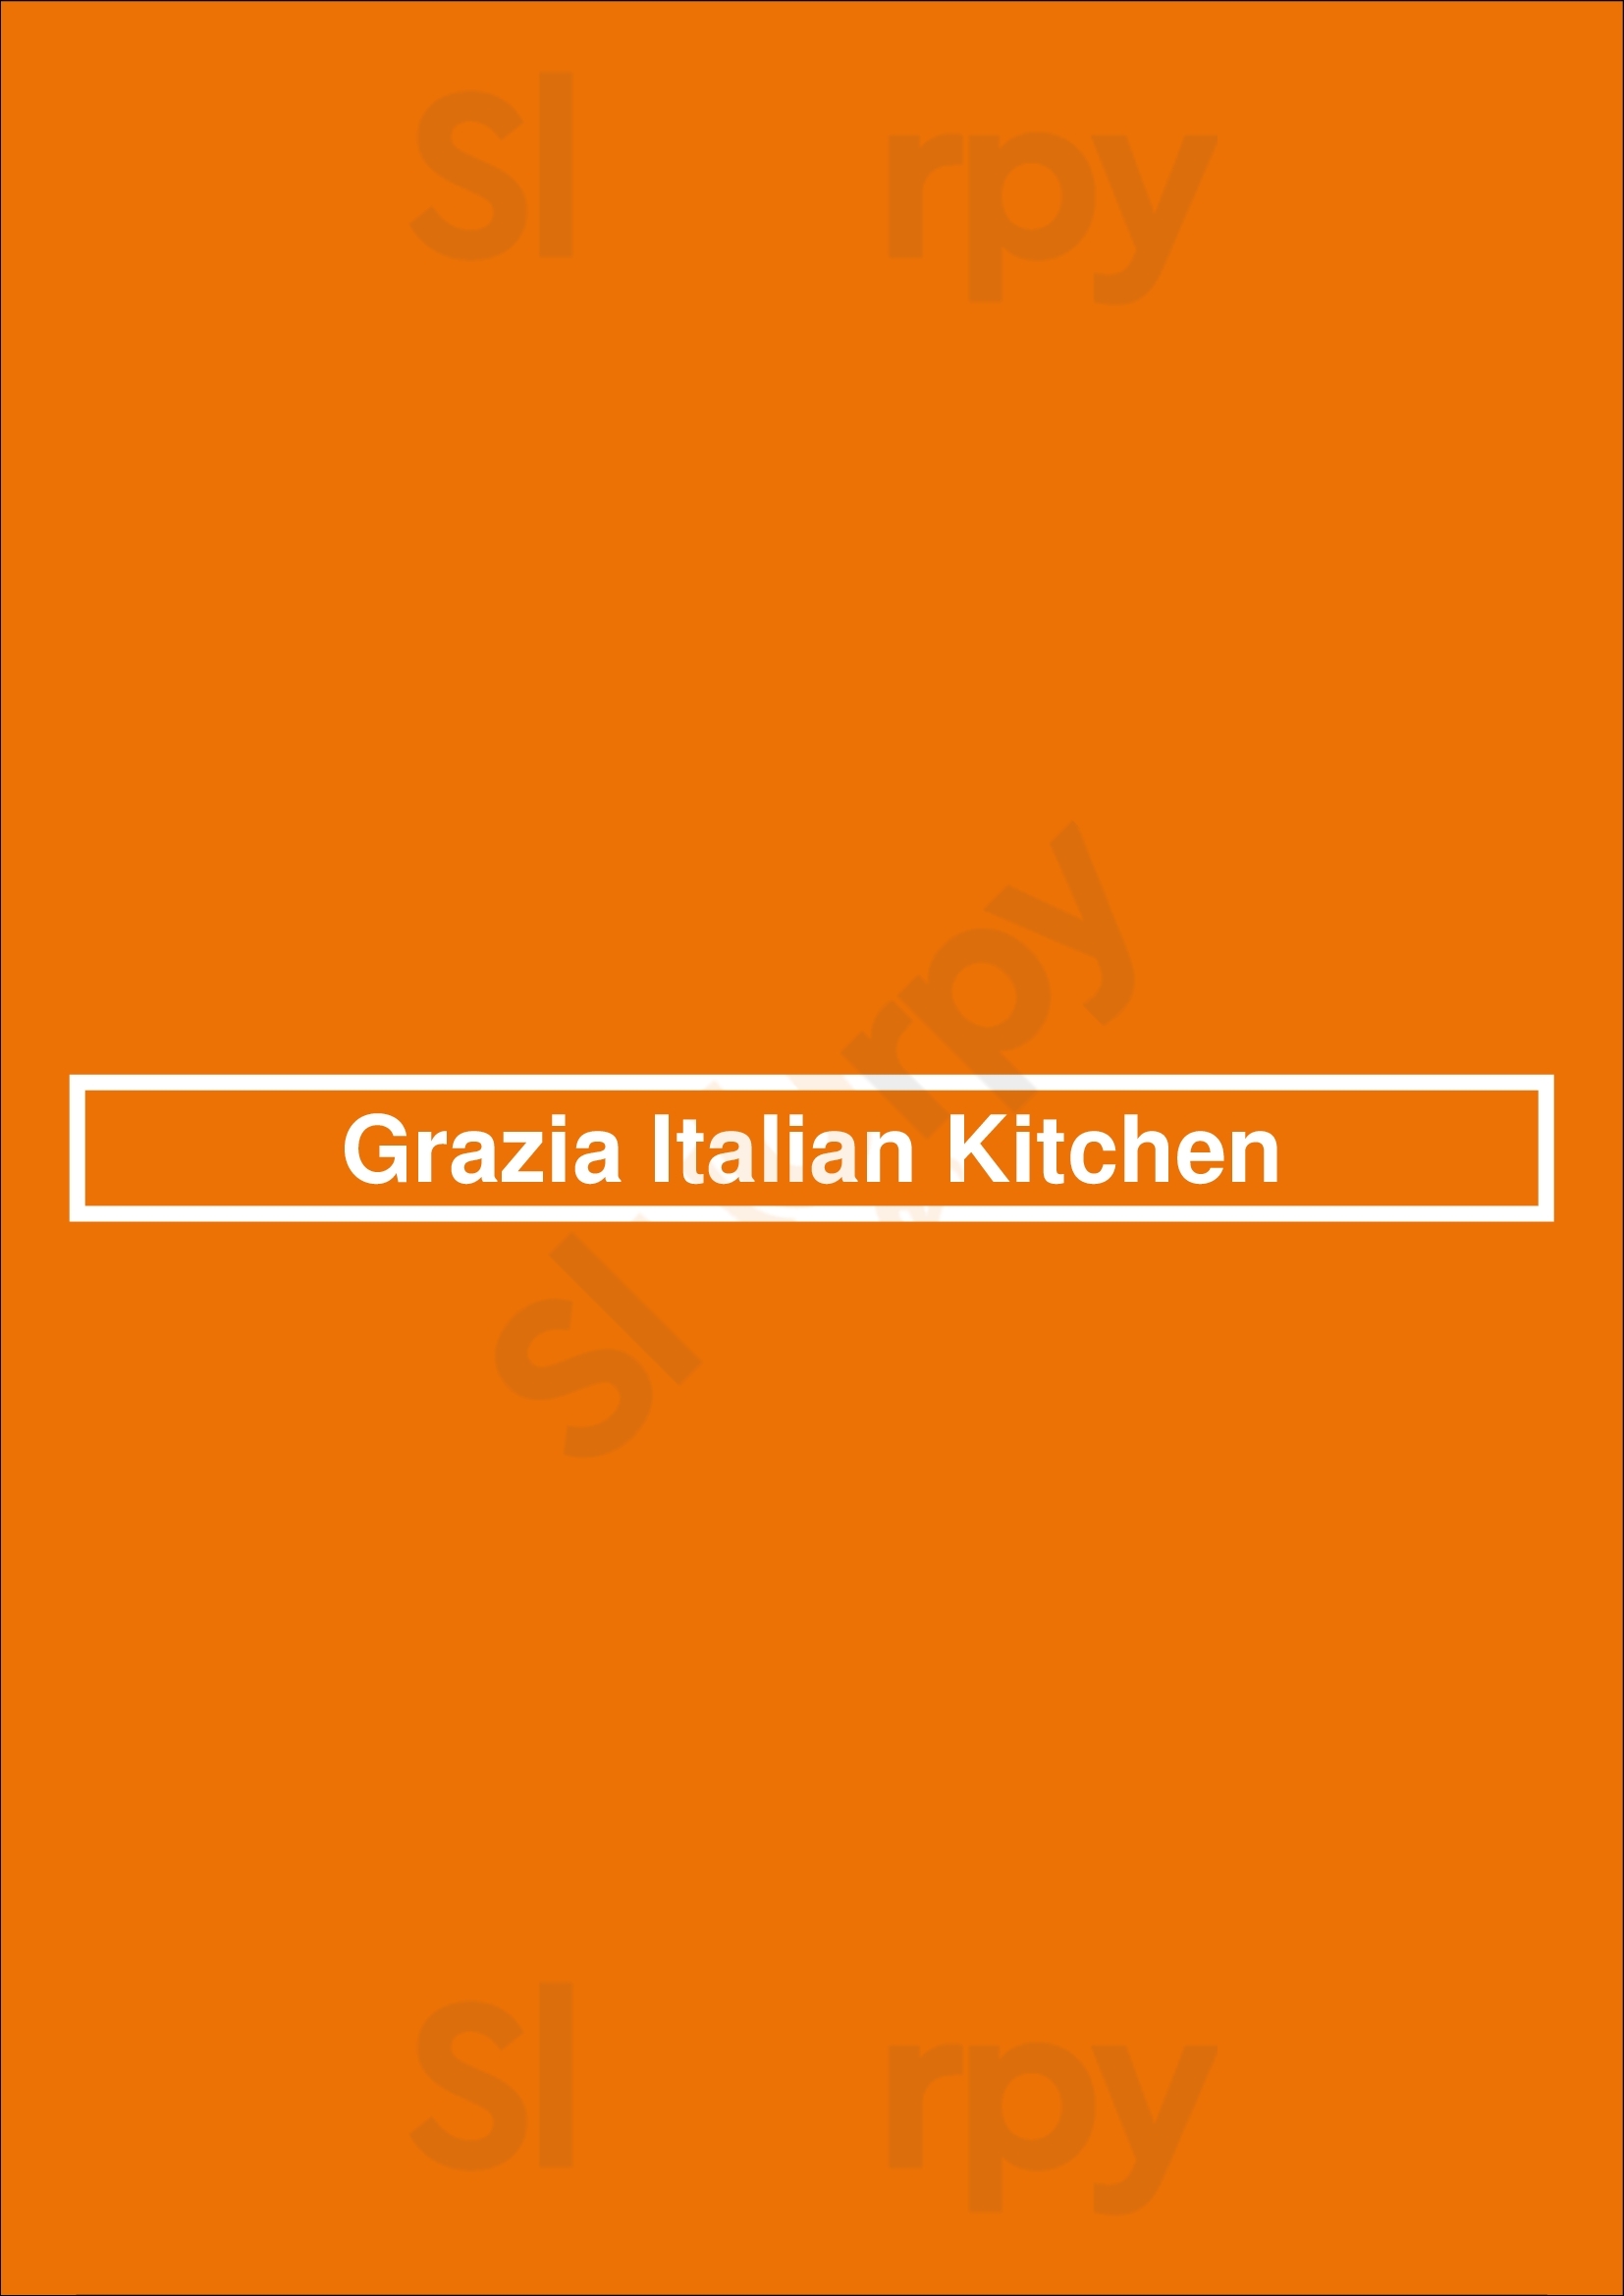 Grazia Italian Kitchen Houston Menu - 1